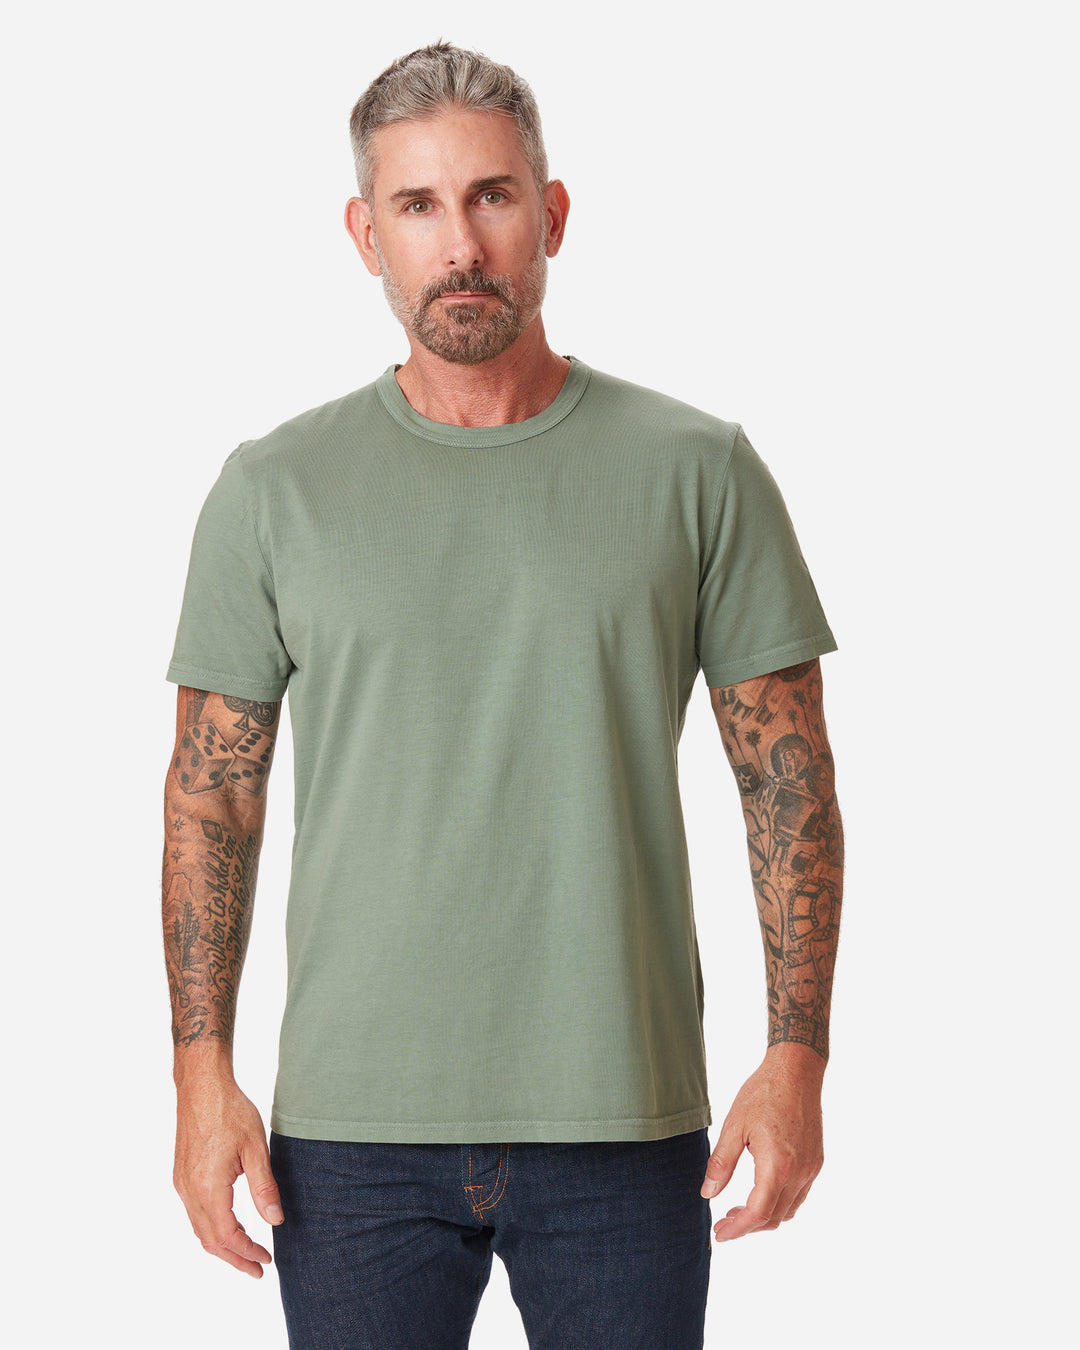 model with directly frontward gaze wearing  Ace Rivington seafoam "sage" light green long staple cotton super soft supima cotton shirt